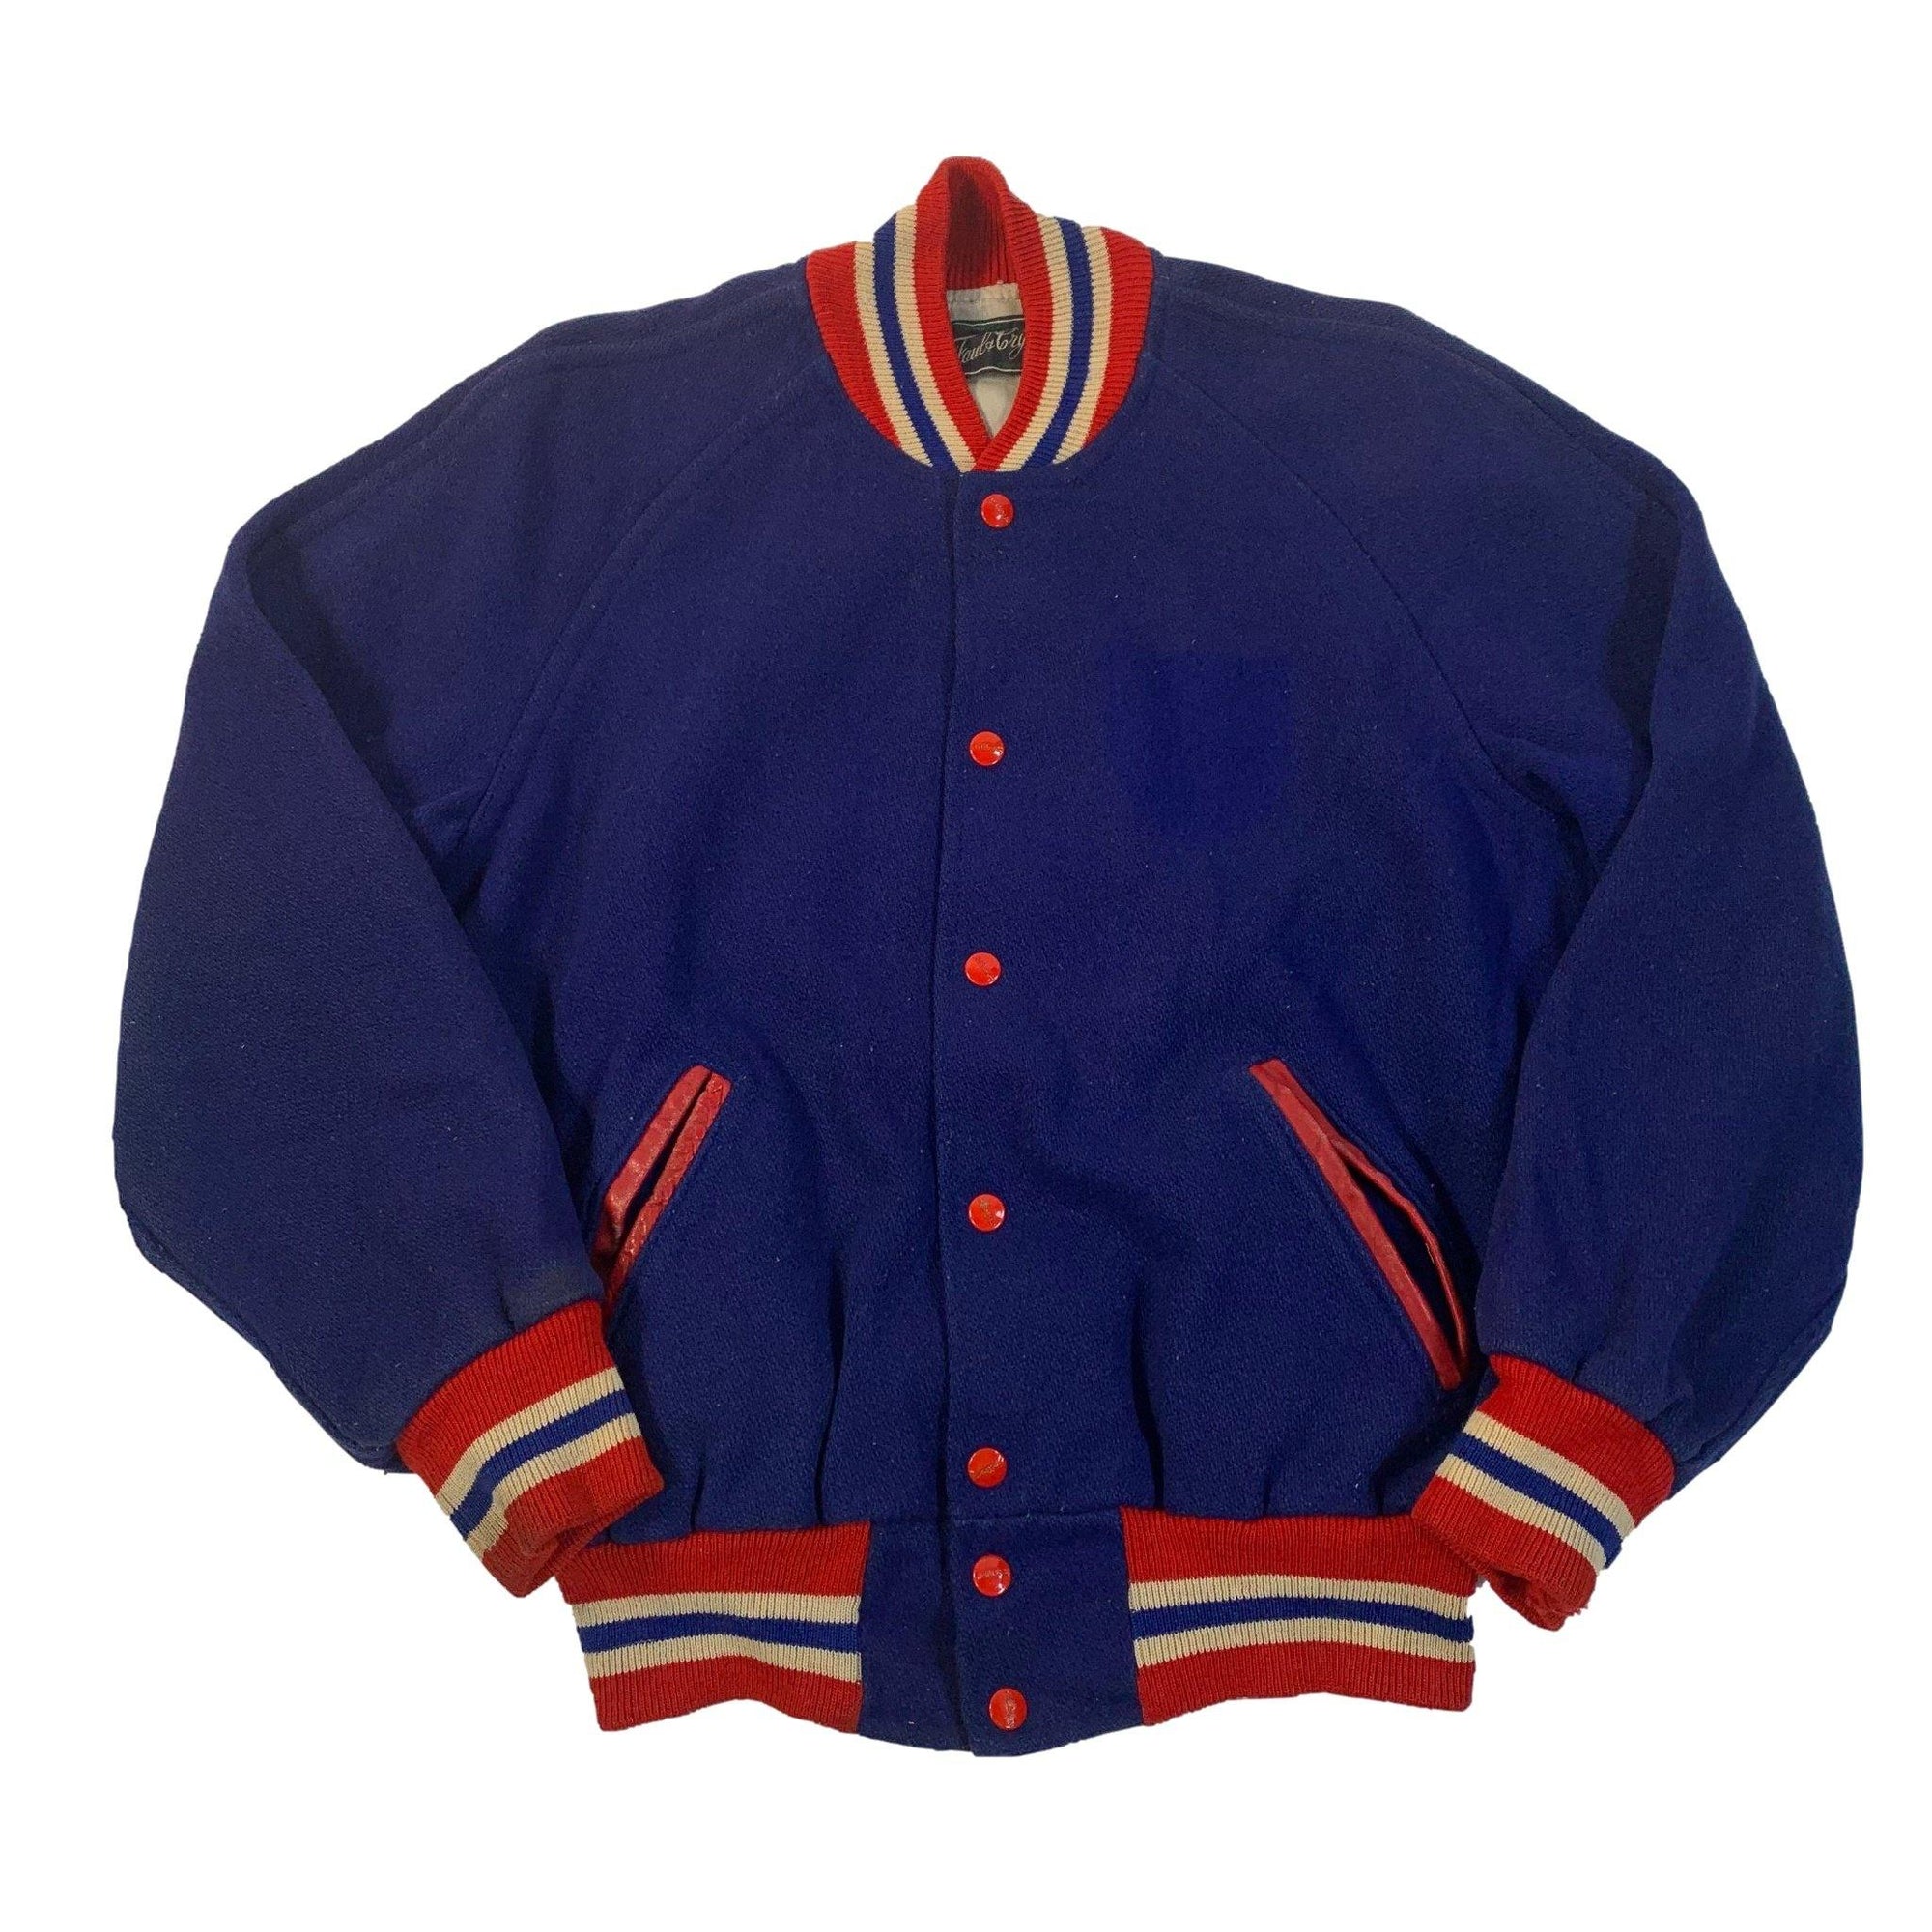 Vintage Faul & Crymes Sporting Goods "Wool" Letterman Jacket - jointcustodydc